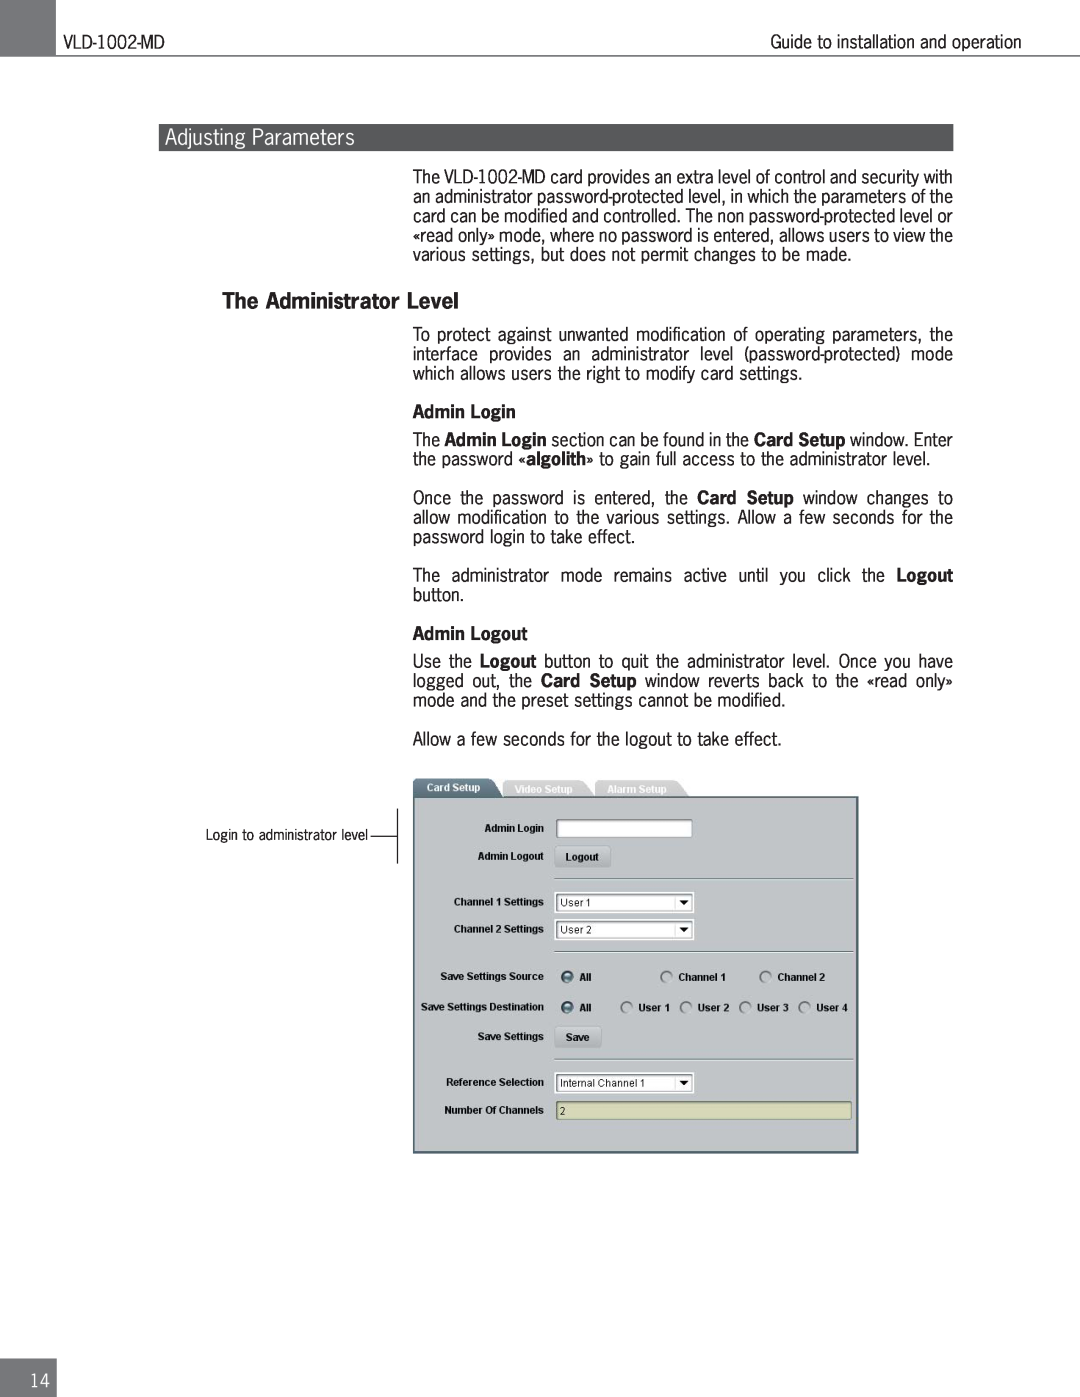 Algolith VLD-1002-MD operation manual The Administrator Level, Adjusting Parameters, Admin Login, Admin Logout 